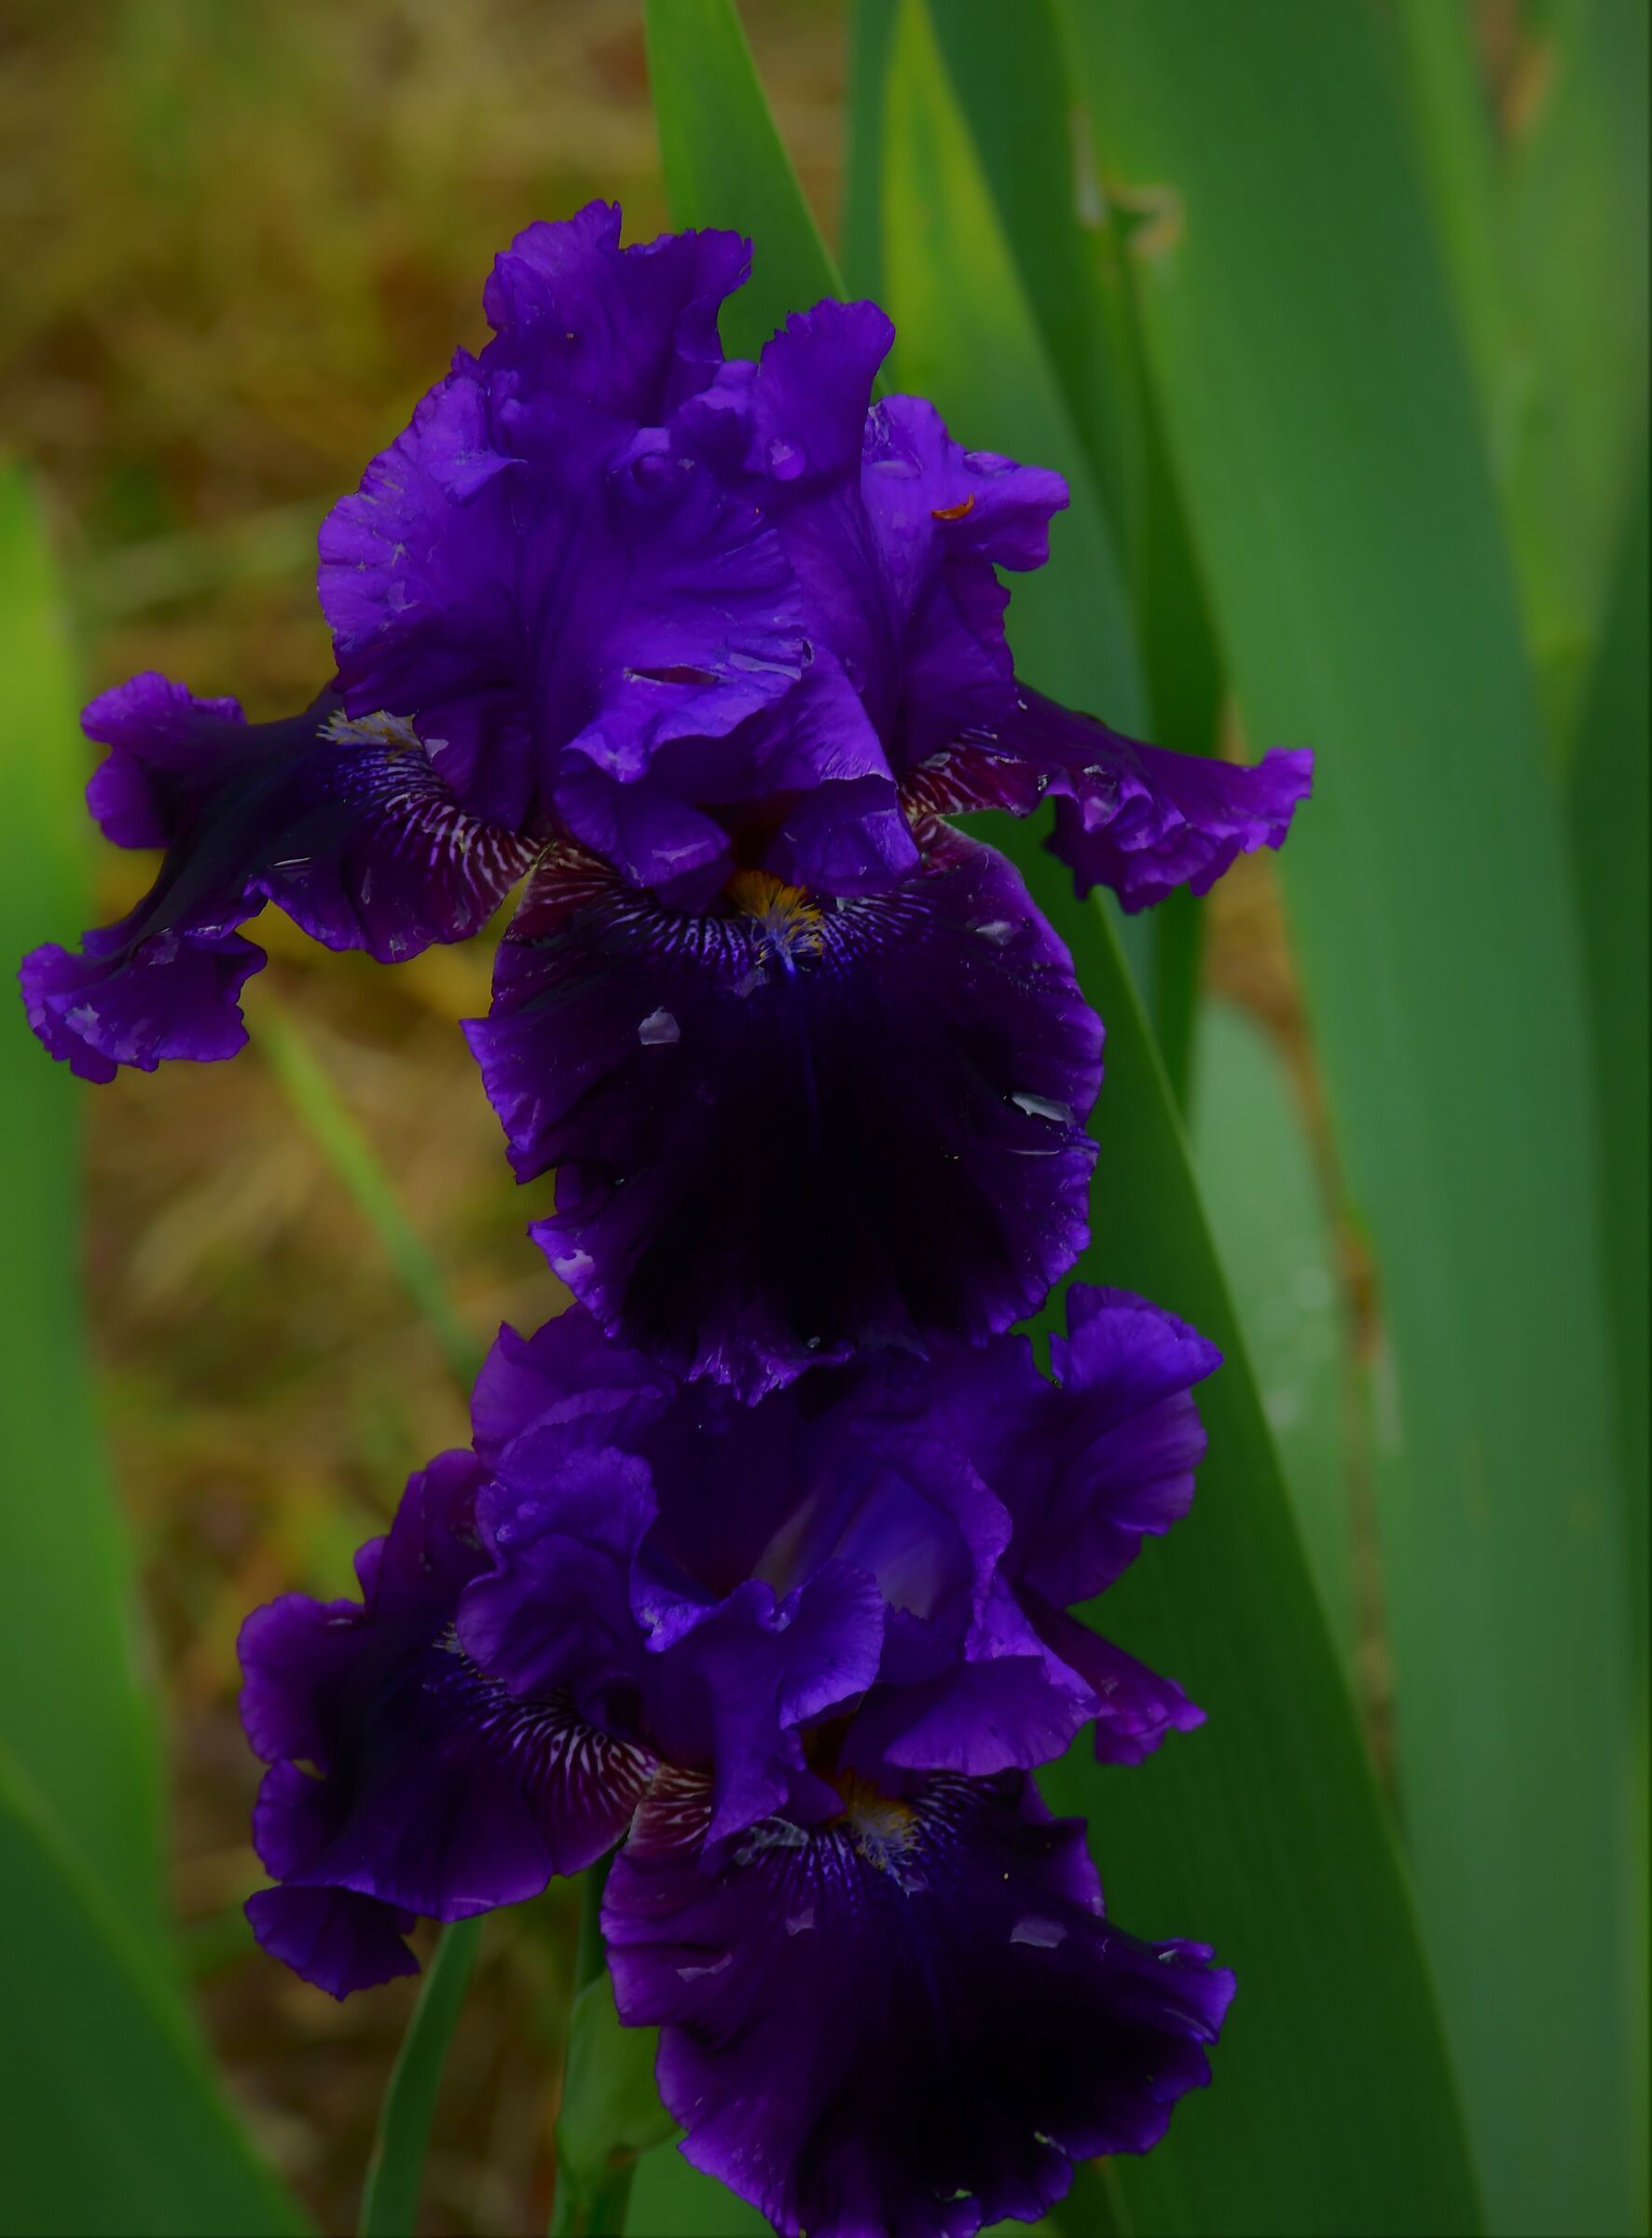 giardino dell'iris a firenze...